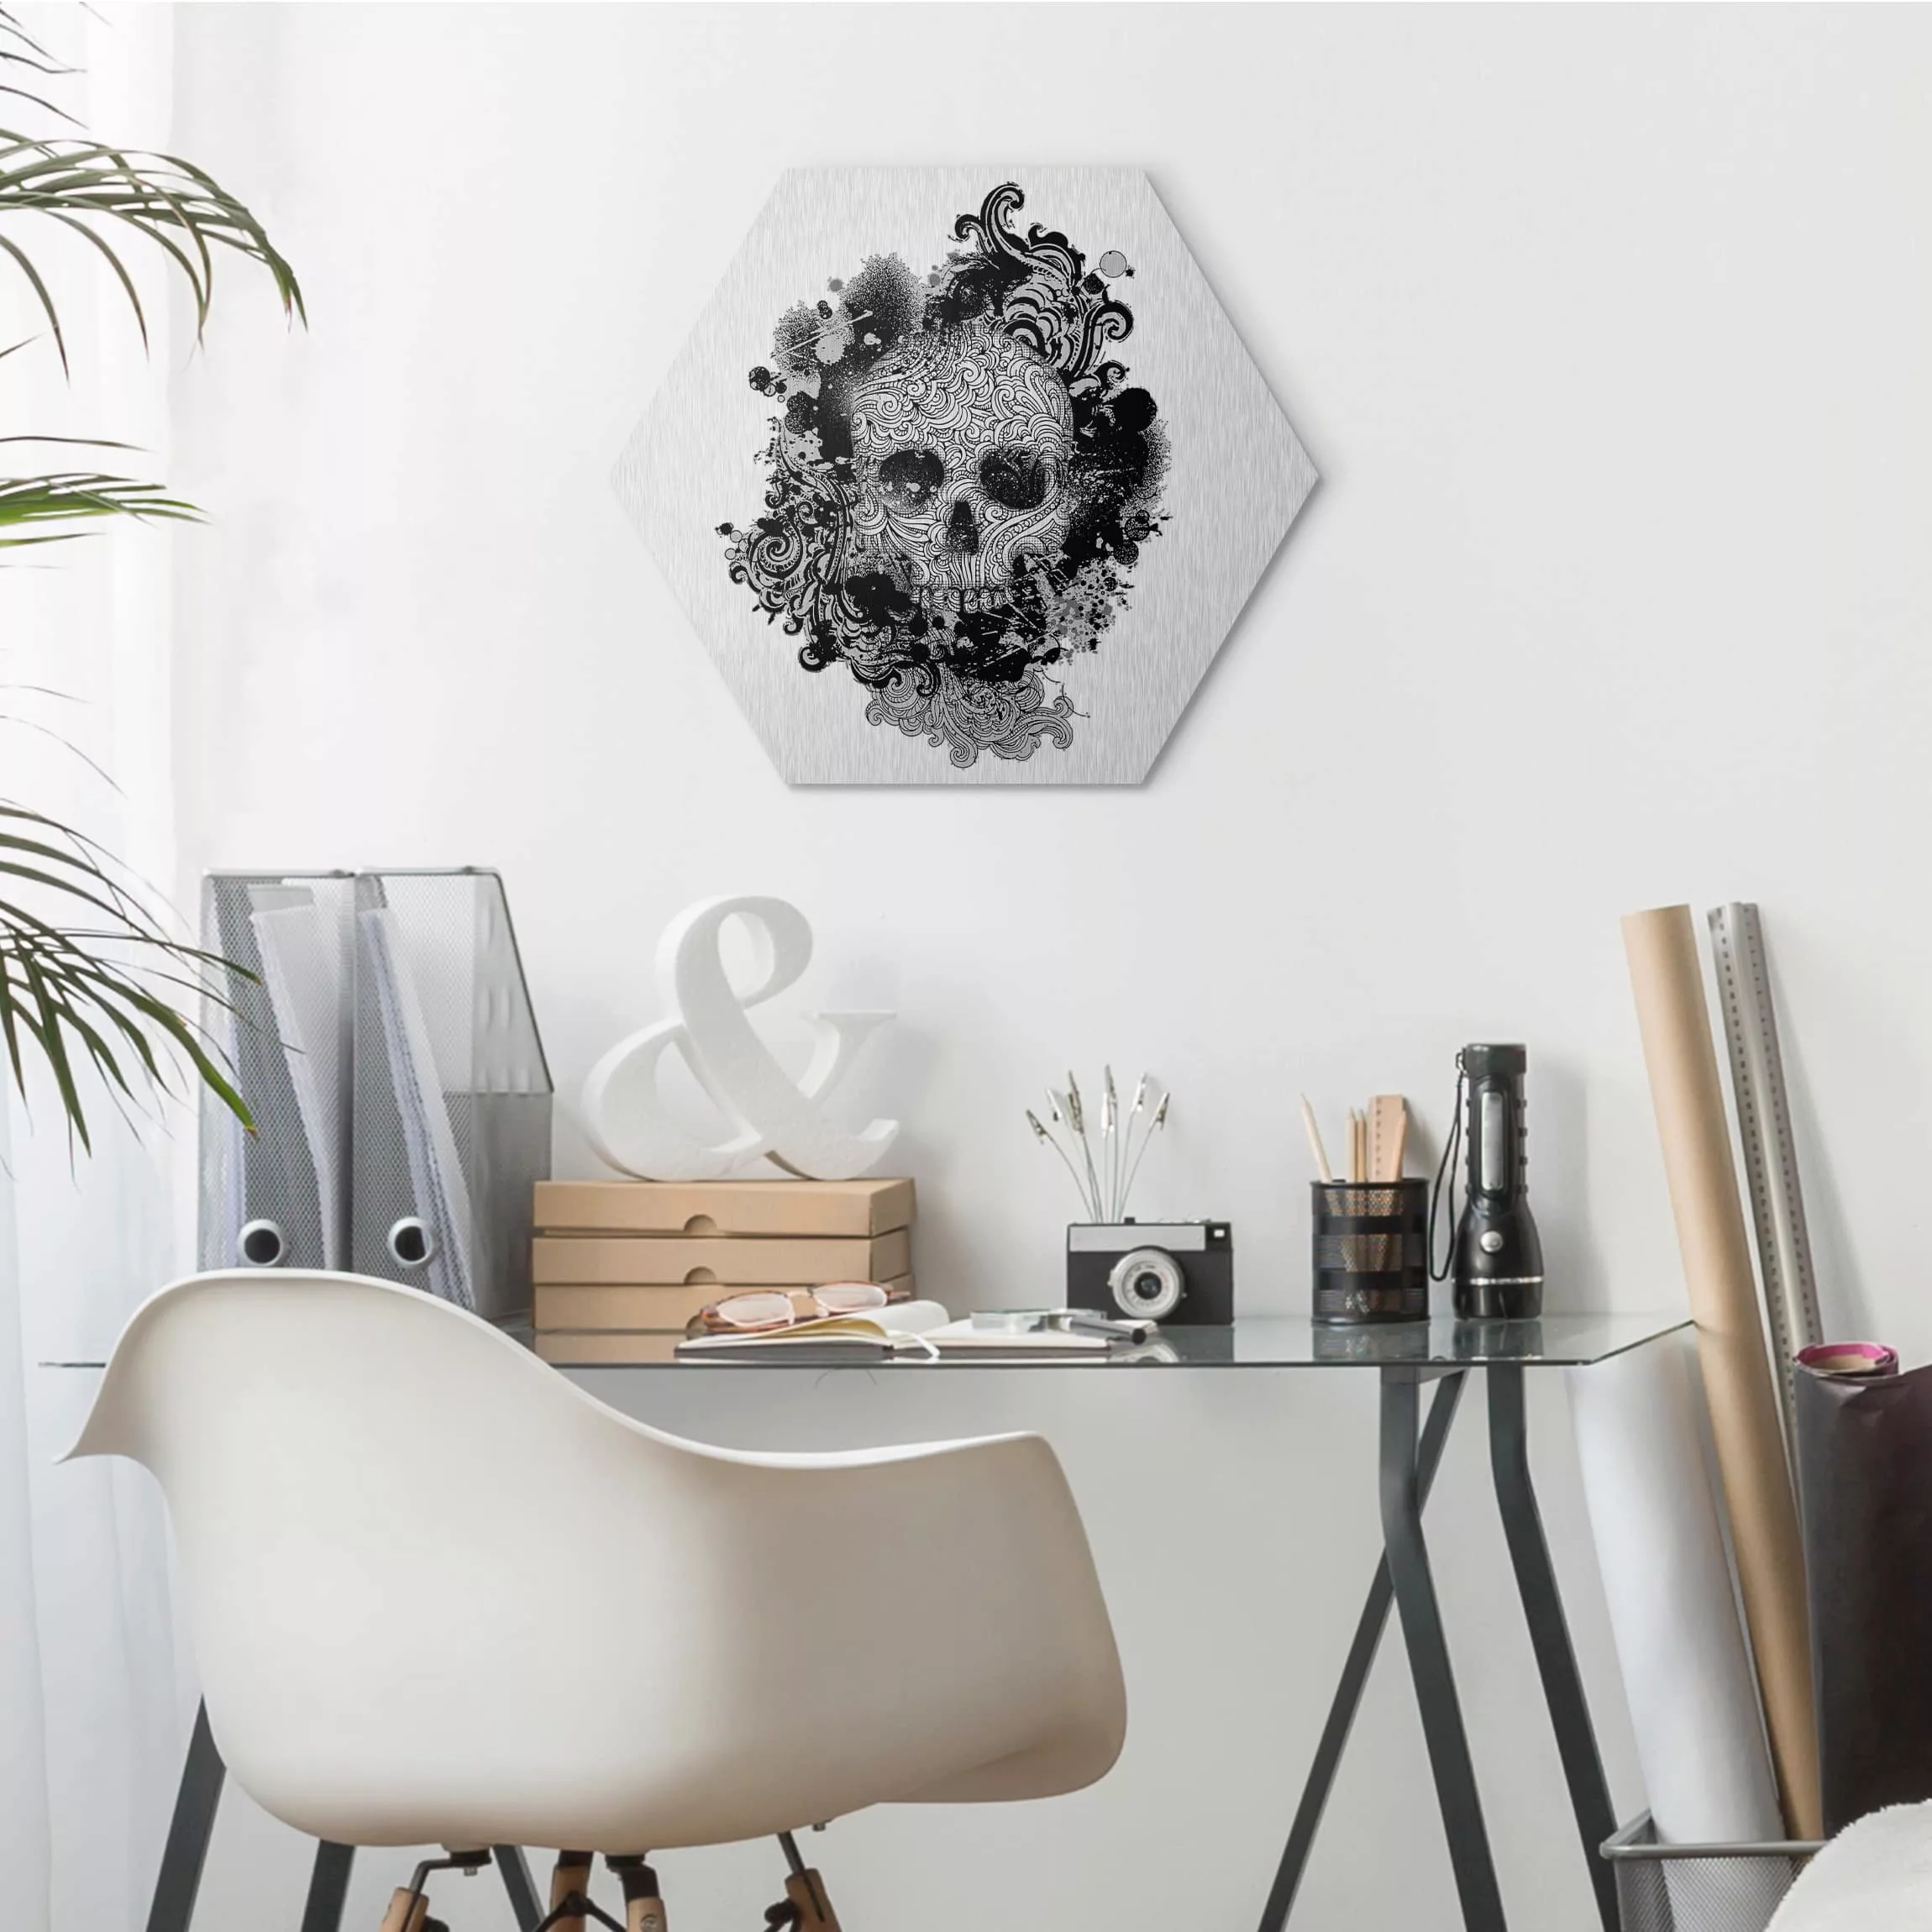 Hexagon-Alu-Dibond Bild Skull günstig online kaufen